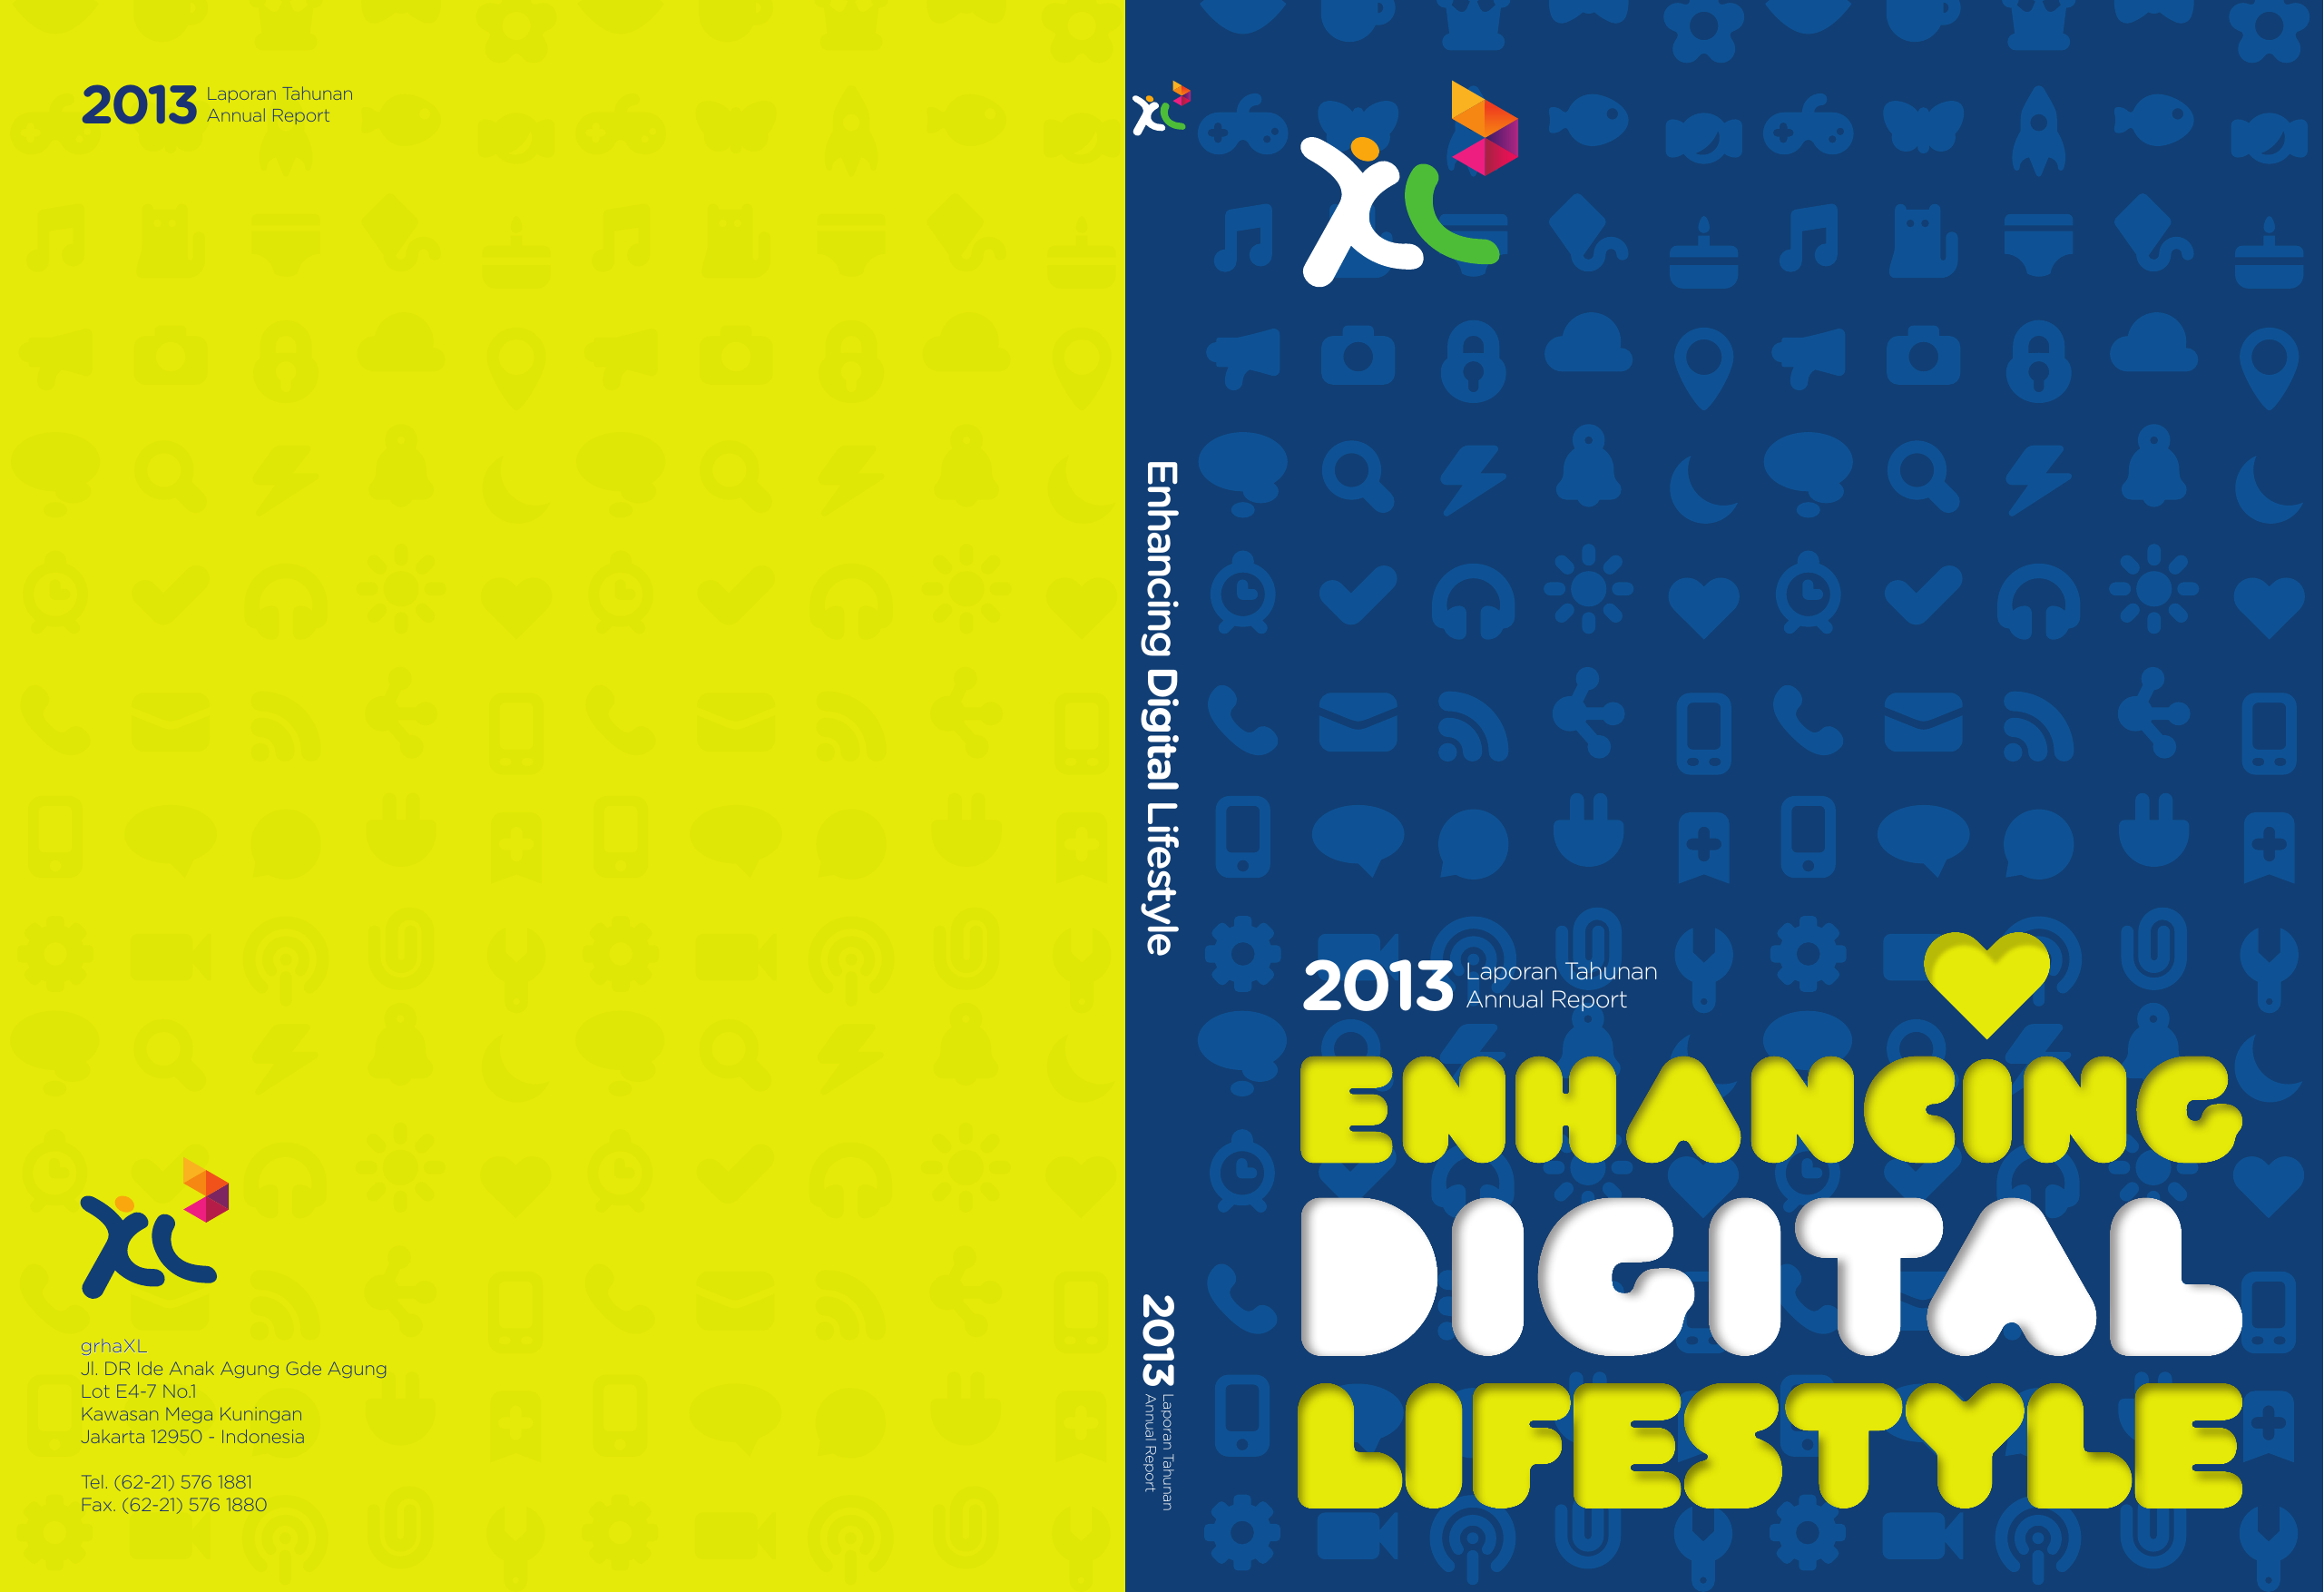 2013 Laporan Tahunan Annual Report Enhancing Digital Lifestyle Laporan Tahunan Annual Report Tel 62 21 576 1881 Fax 62 21 576 1880 2013 grhaXL Jl DR